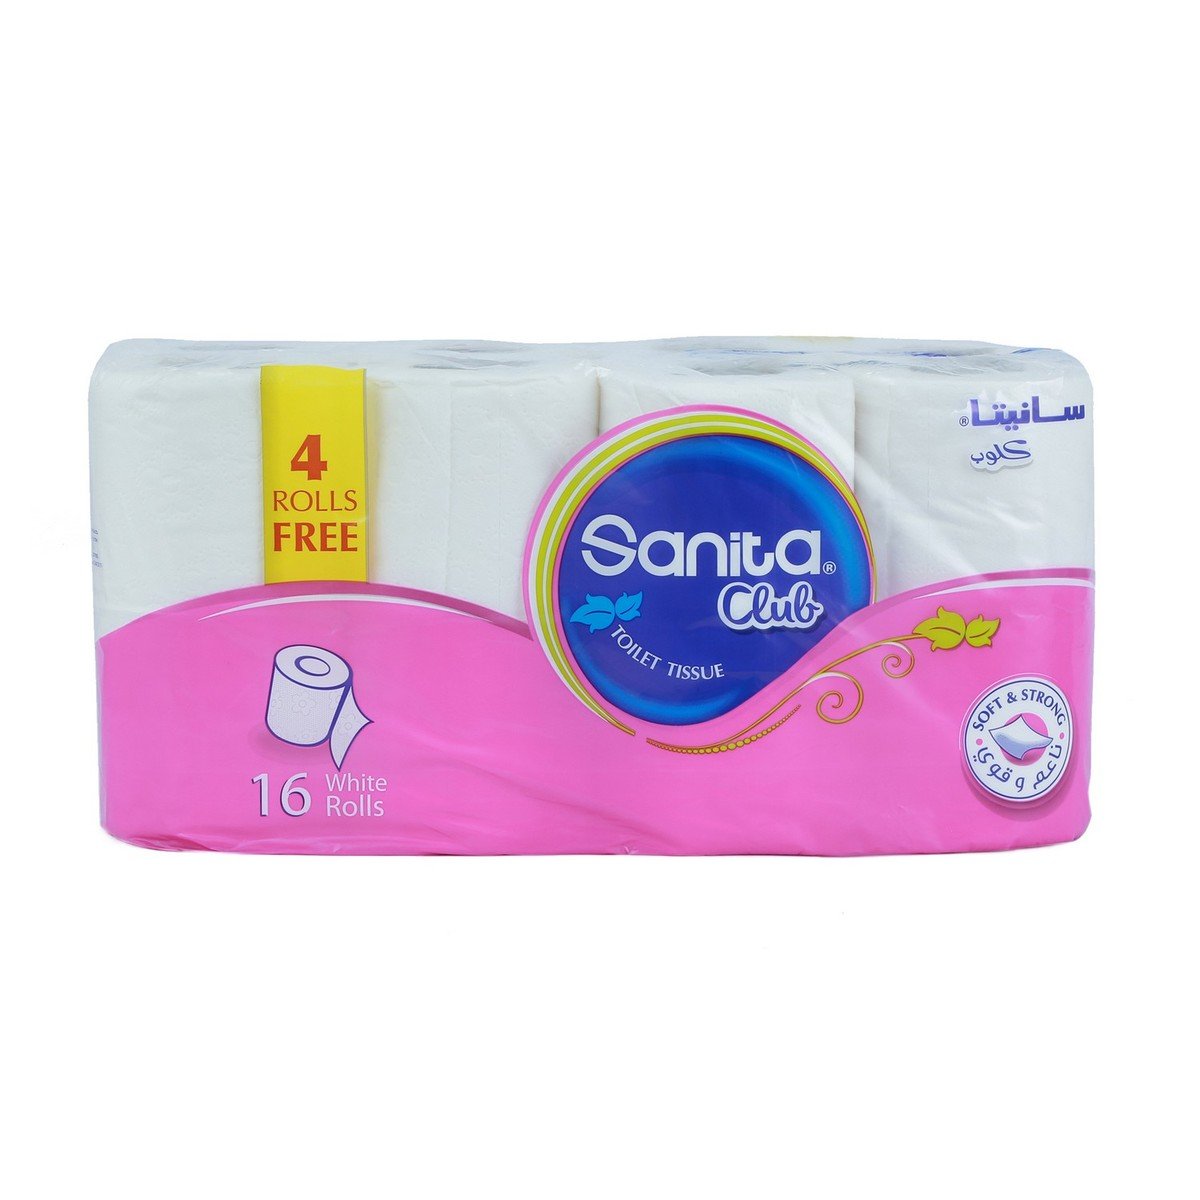 Sanita Club Toilet tissue 12 + 4 rolls